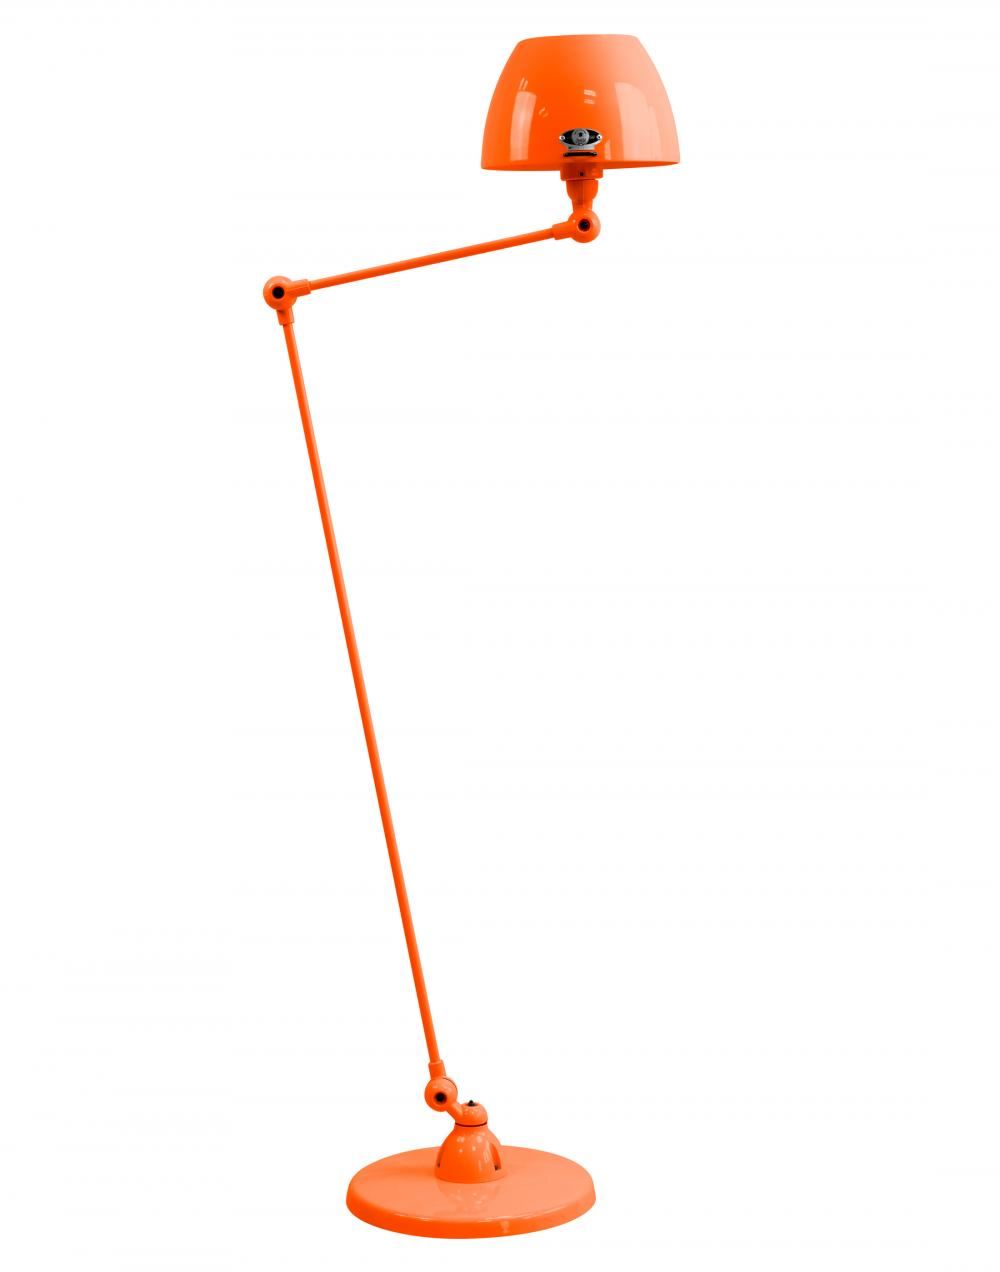 Jielde Aicler Two Arm Floor Light Curved Shade Orange Gloss